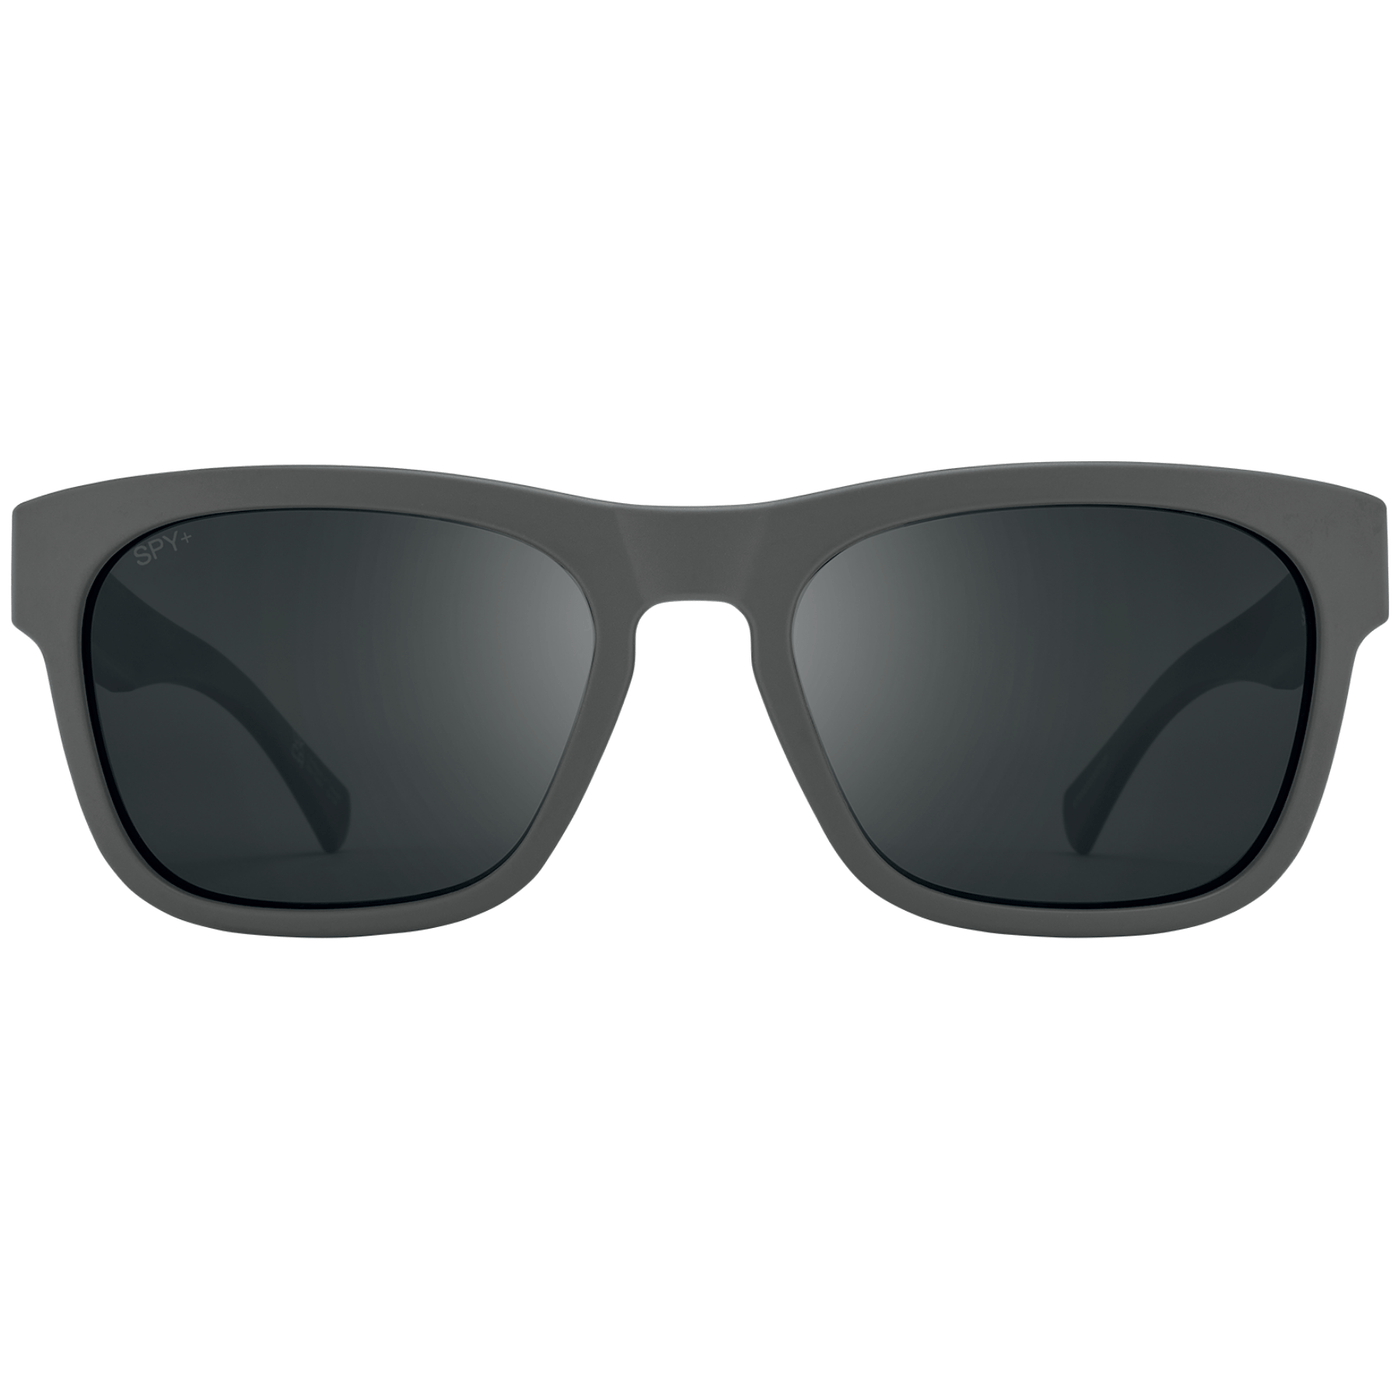 SPY CROSSWAY Polarized Sunglasses - Black 8Lines Shop - Fast Shipping